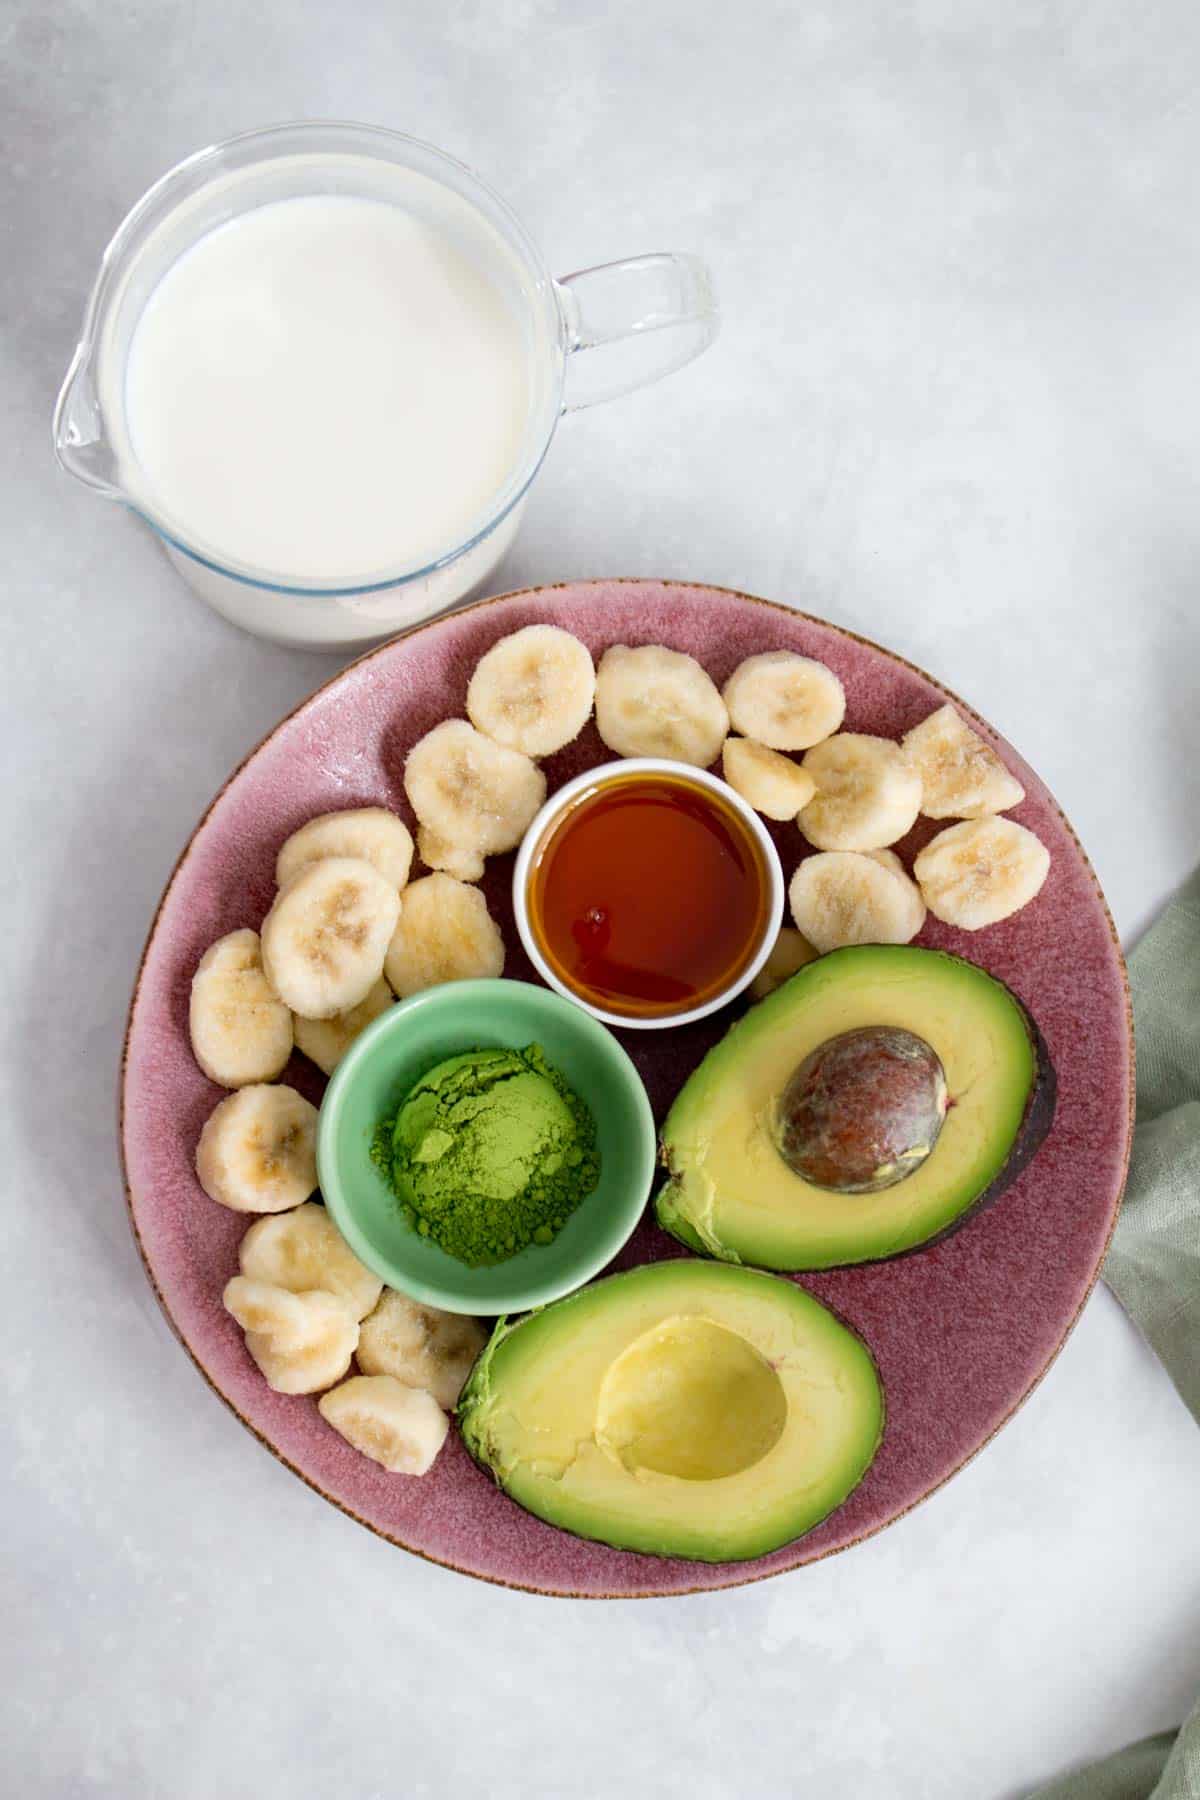 Ingredients to make a matcha avocado smoothie.